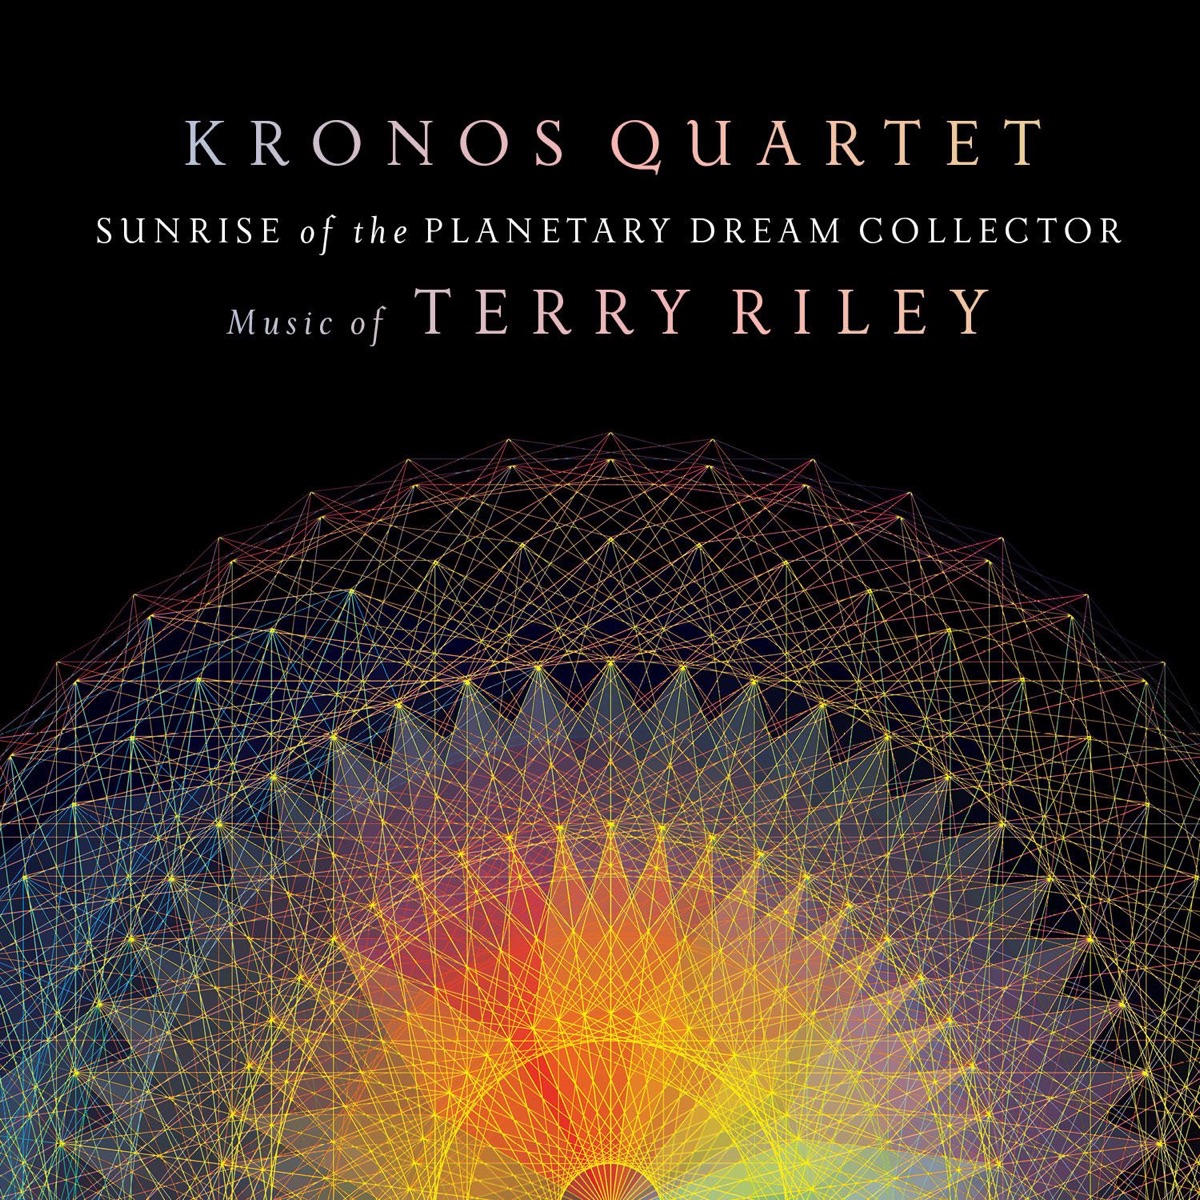 Terry Riley: Sun Rings - Album by Kronos Quartet - Apple Music